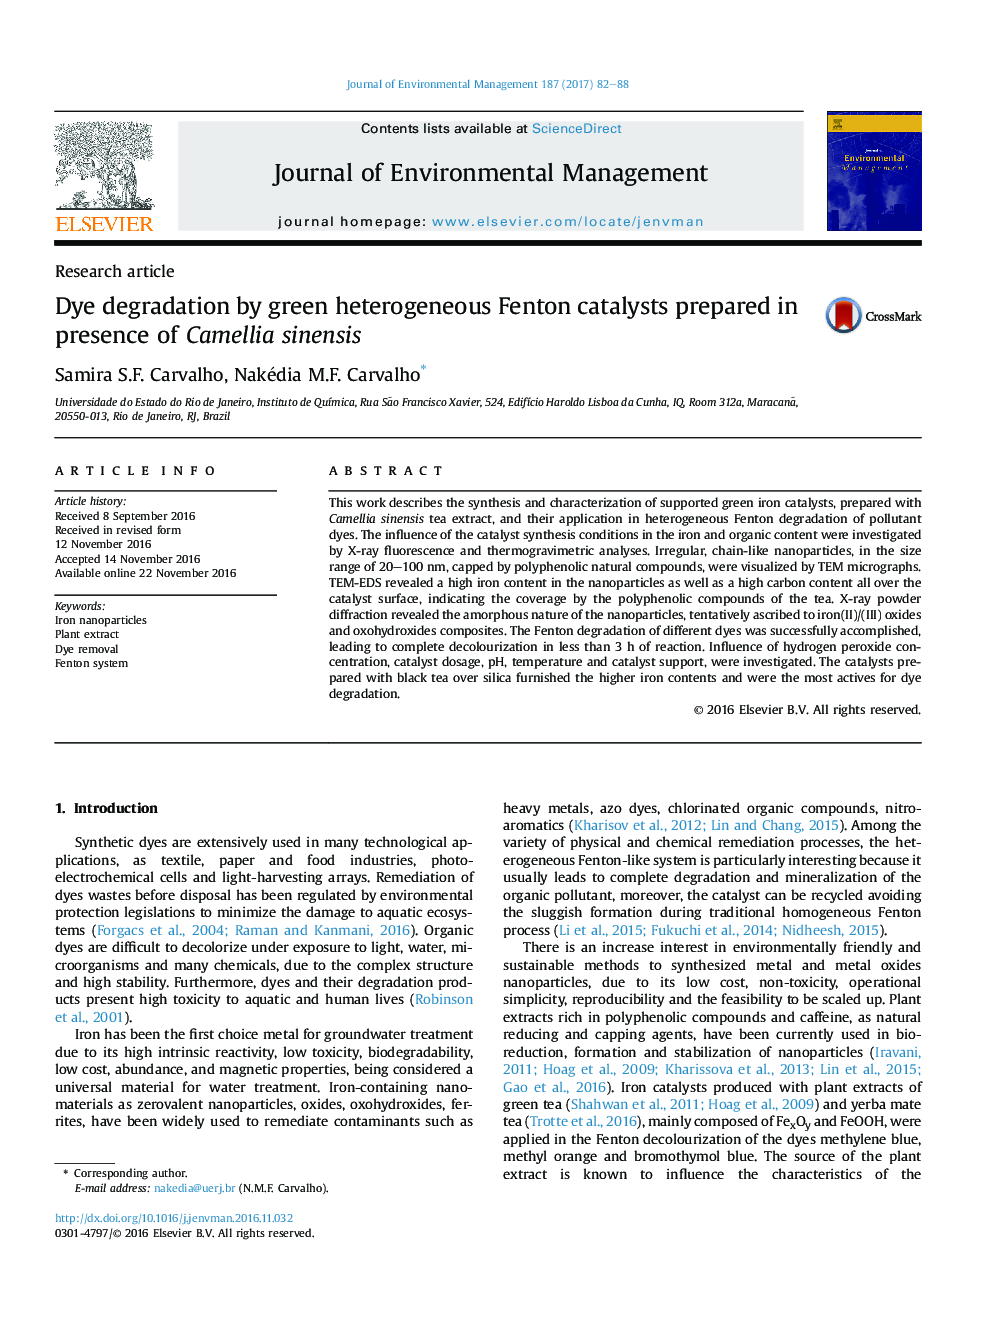 Dye degradation by green heterogeneous Fenton catalysts prepared in presence of Camellia sinensis